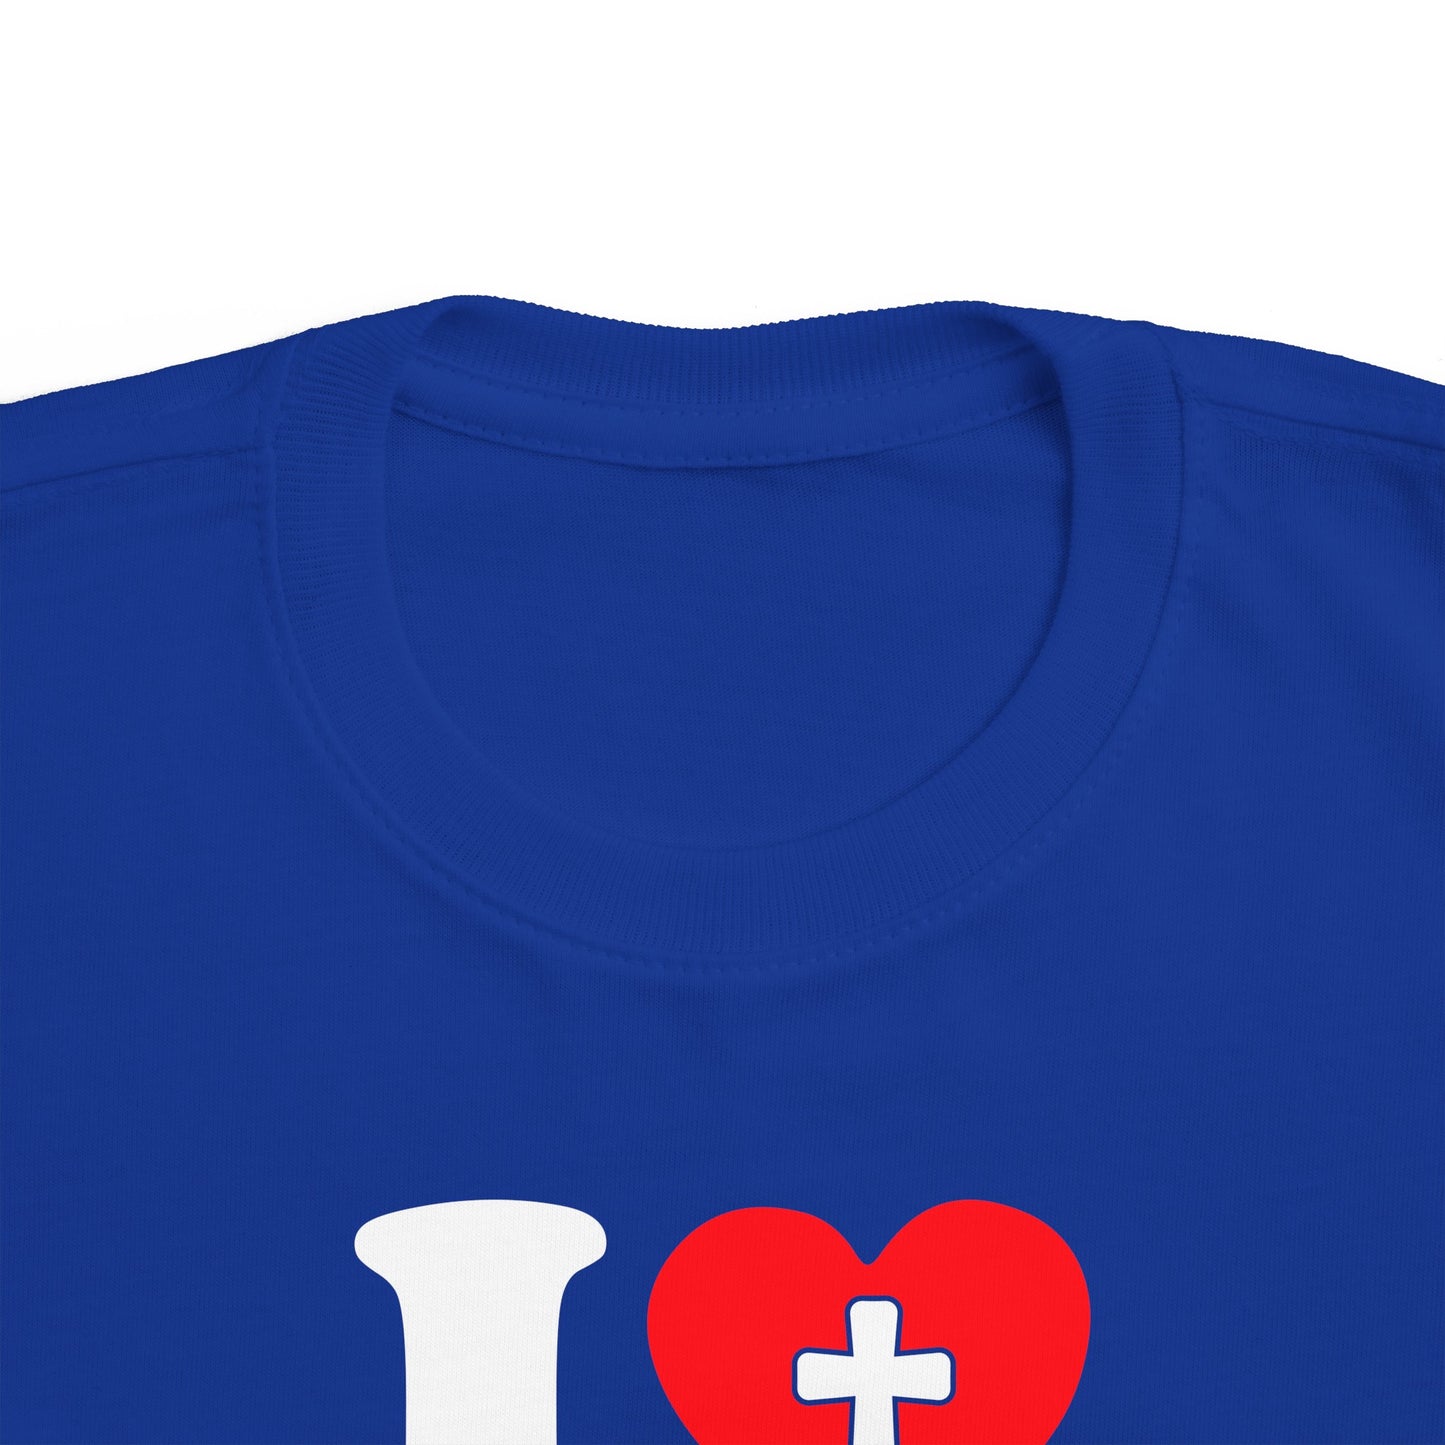 I Love Faith Toddler's Christian T-shirt Printify